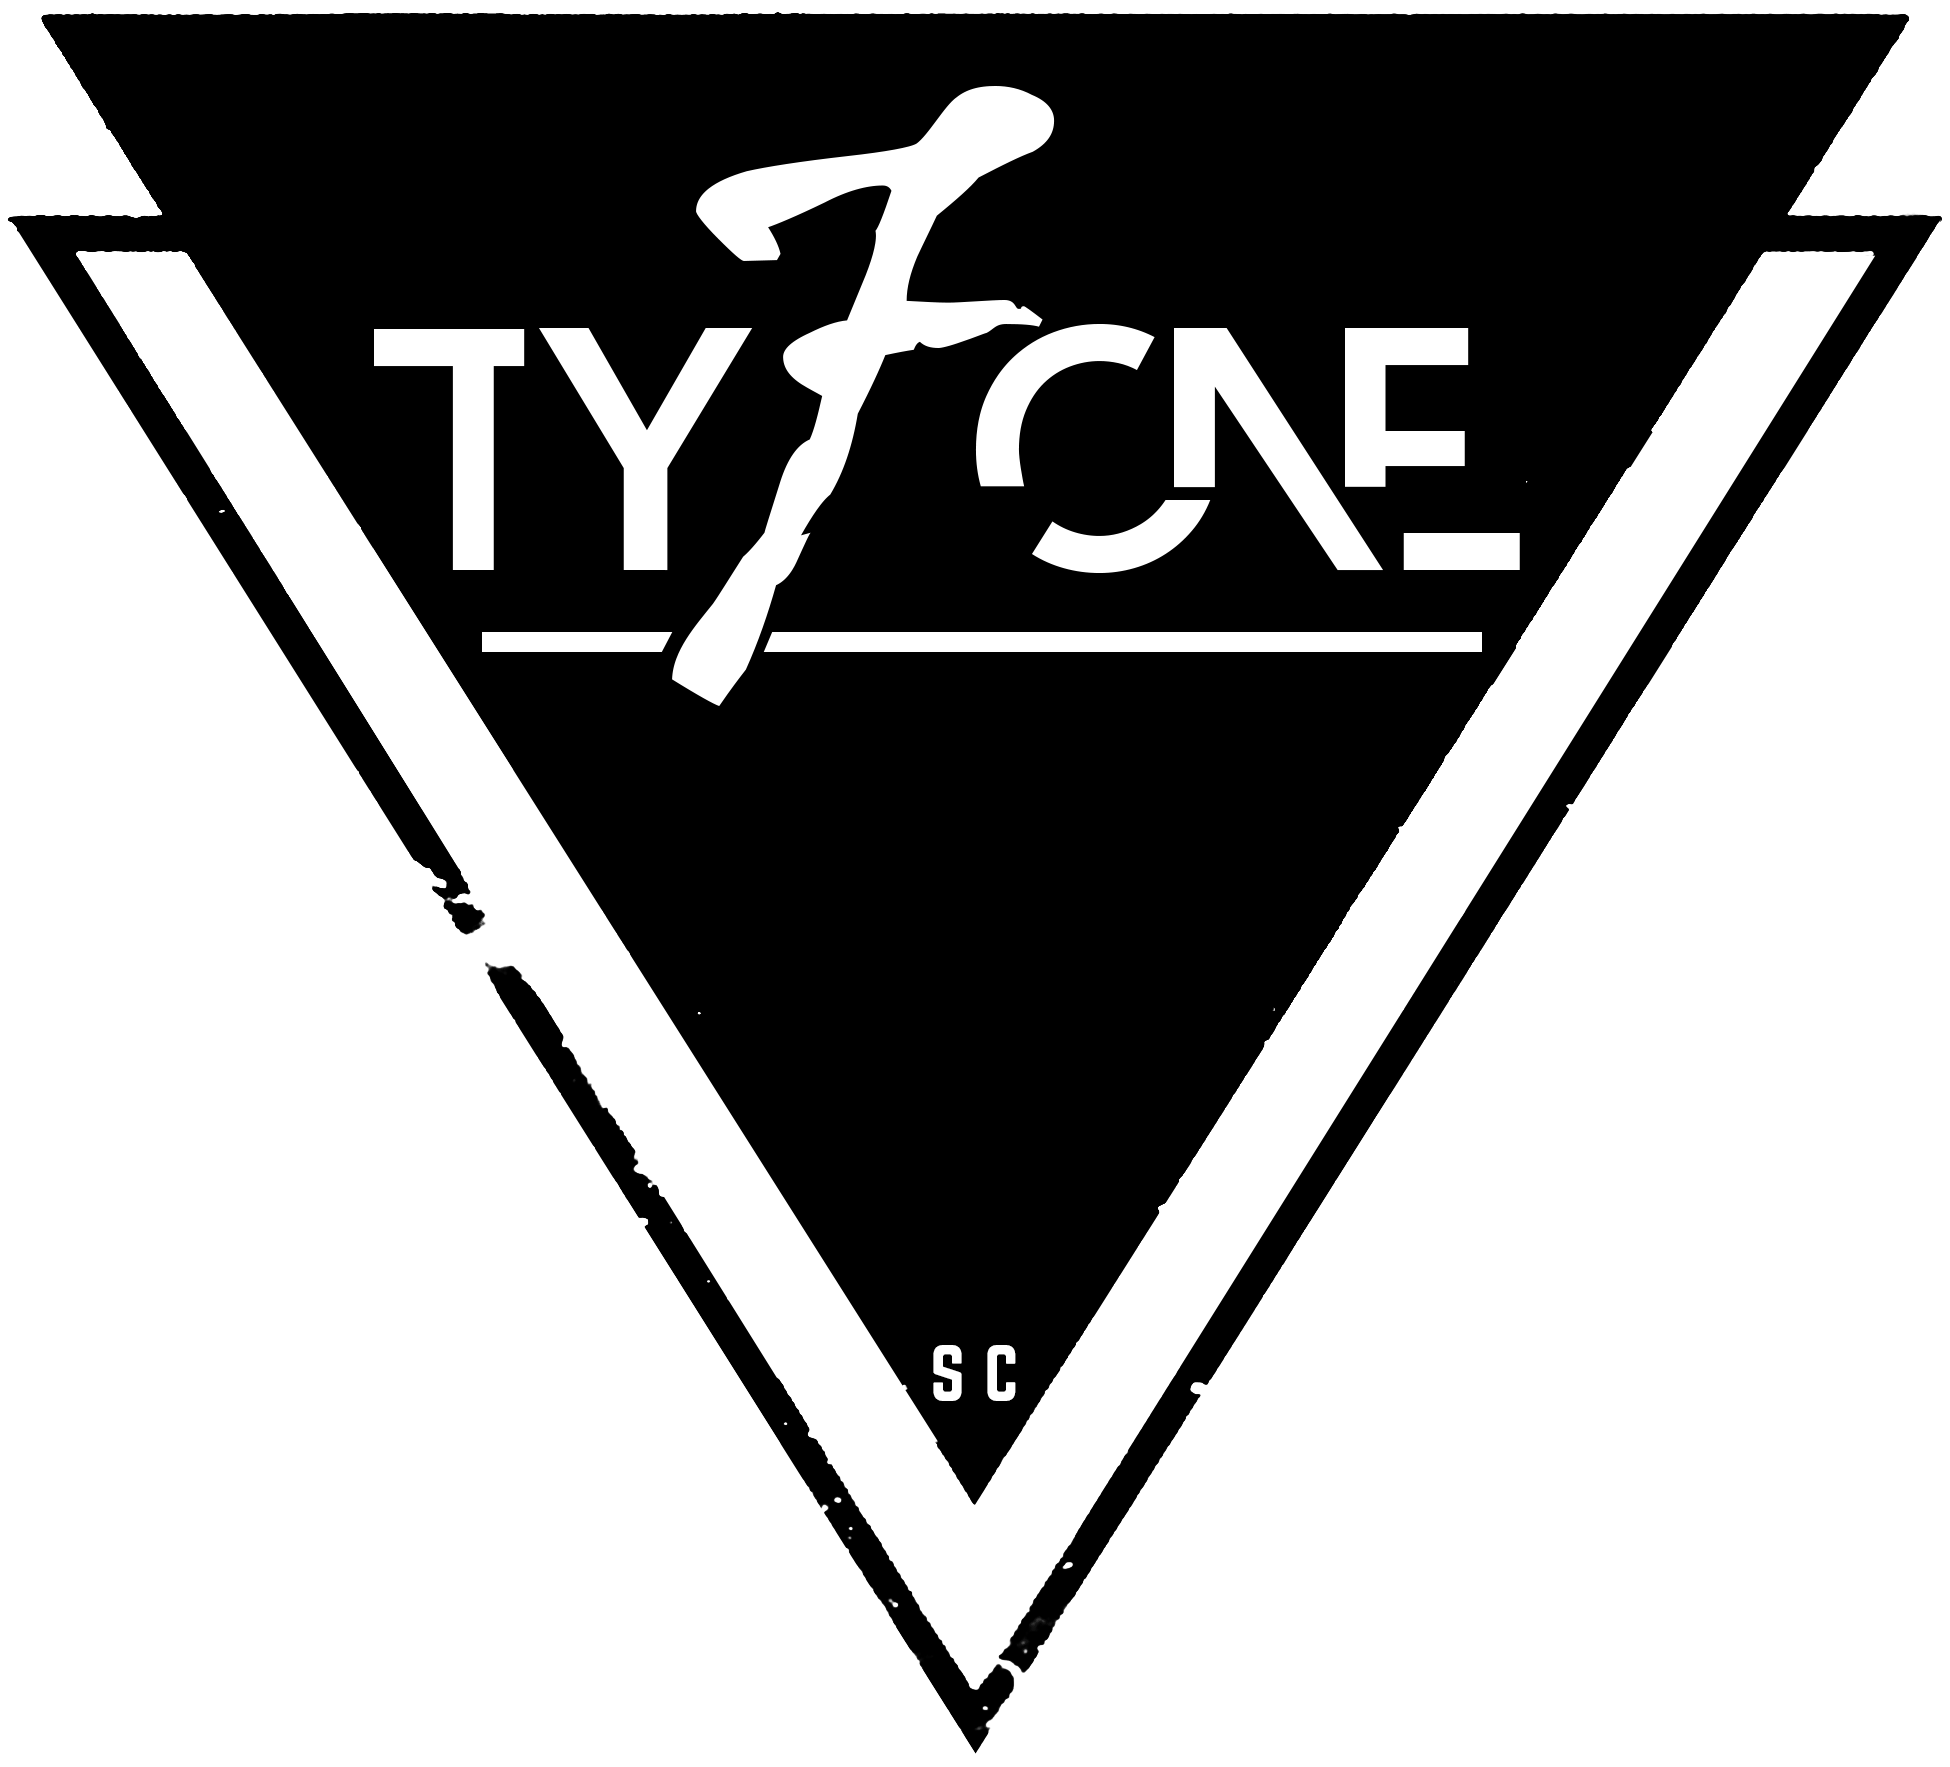 Ty7one_Logo_sc_